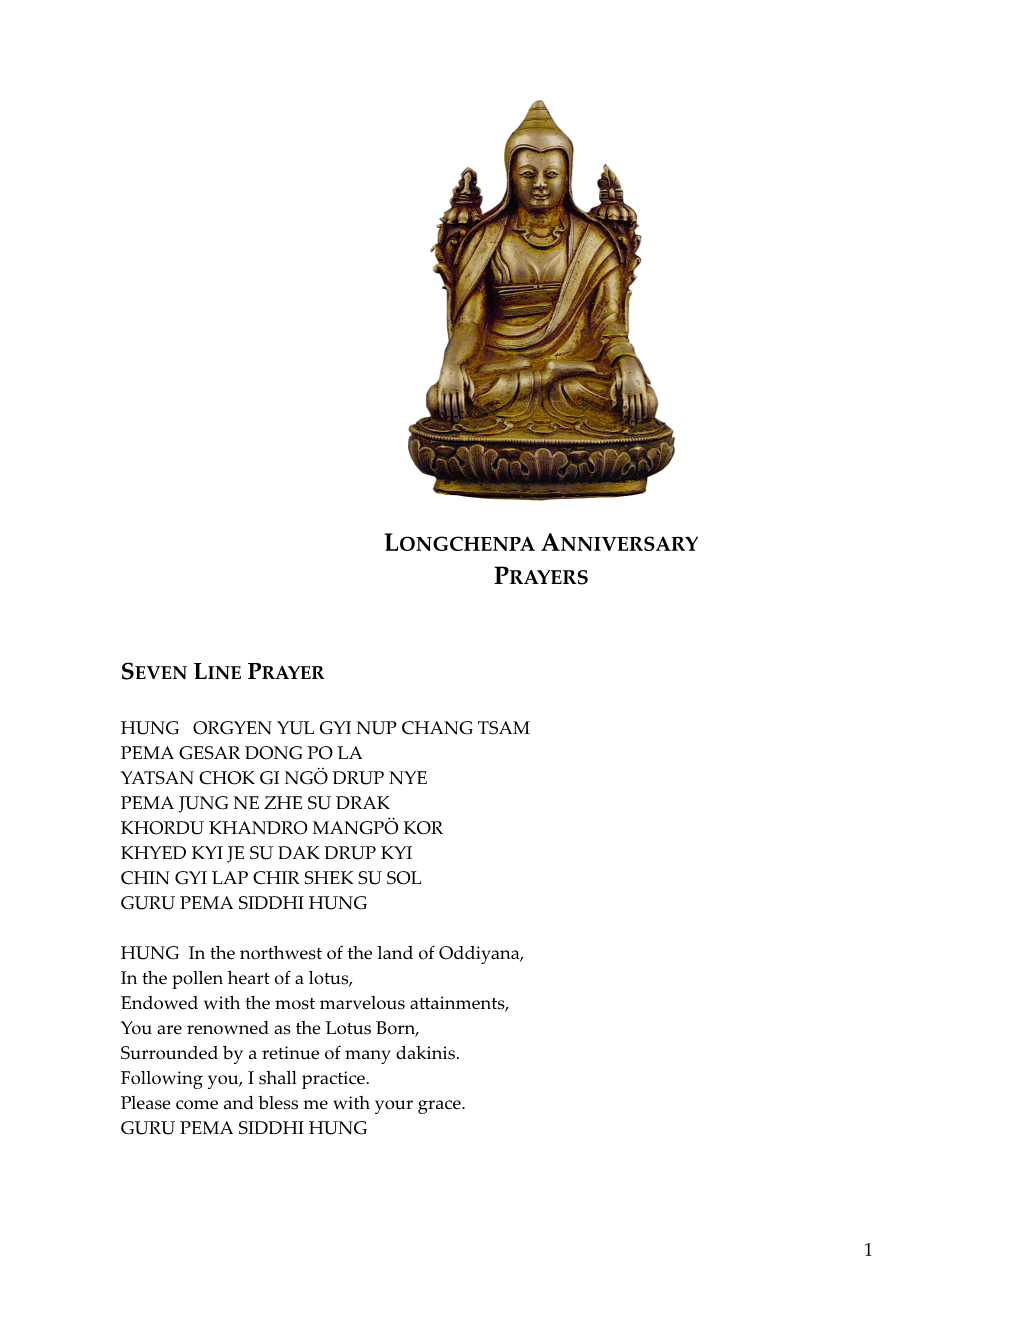 Longchenpa Anniversary Prayer Book 2021 28Jan21 V9